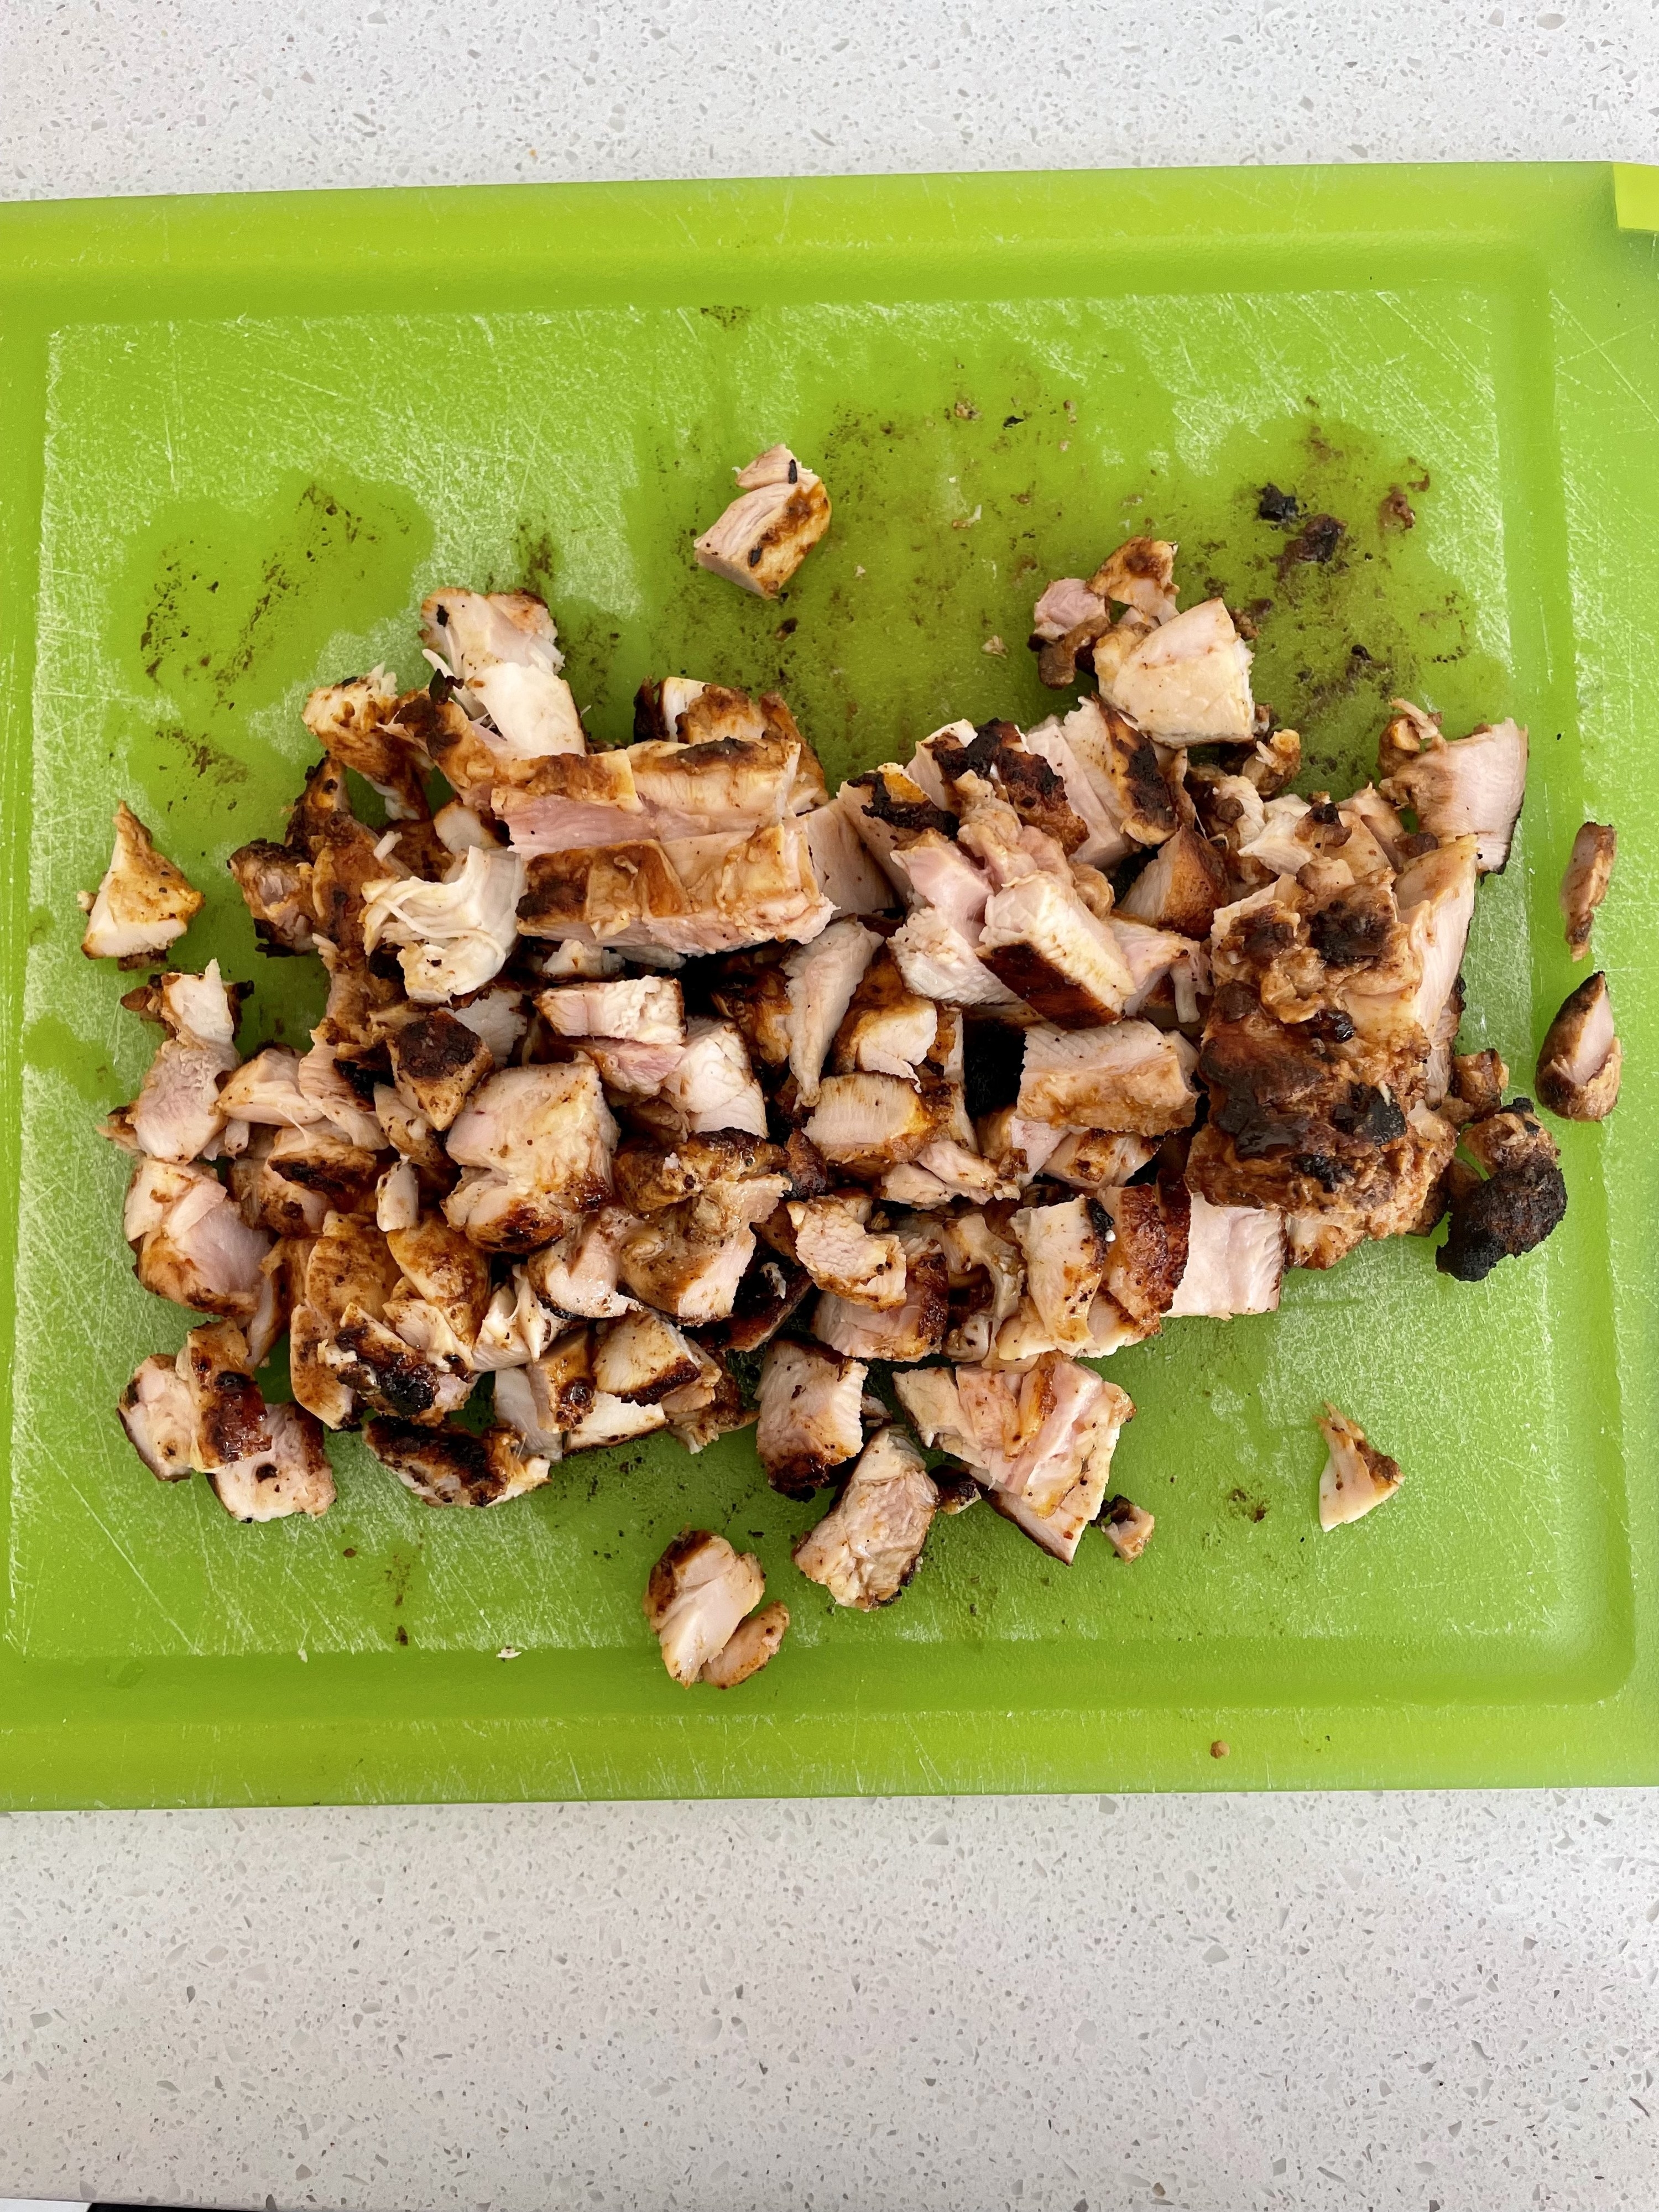 Chopped chicken on a cutting board